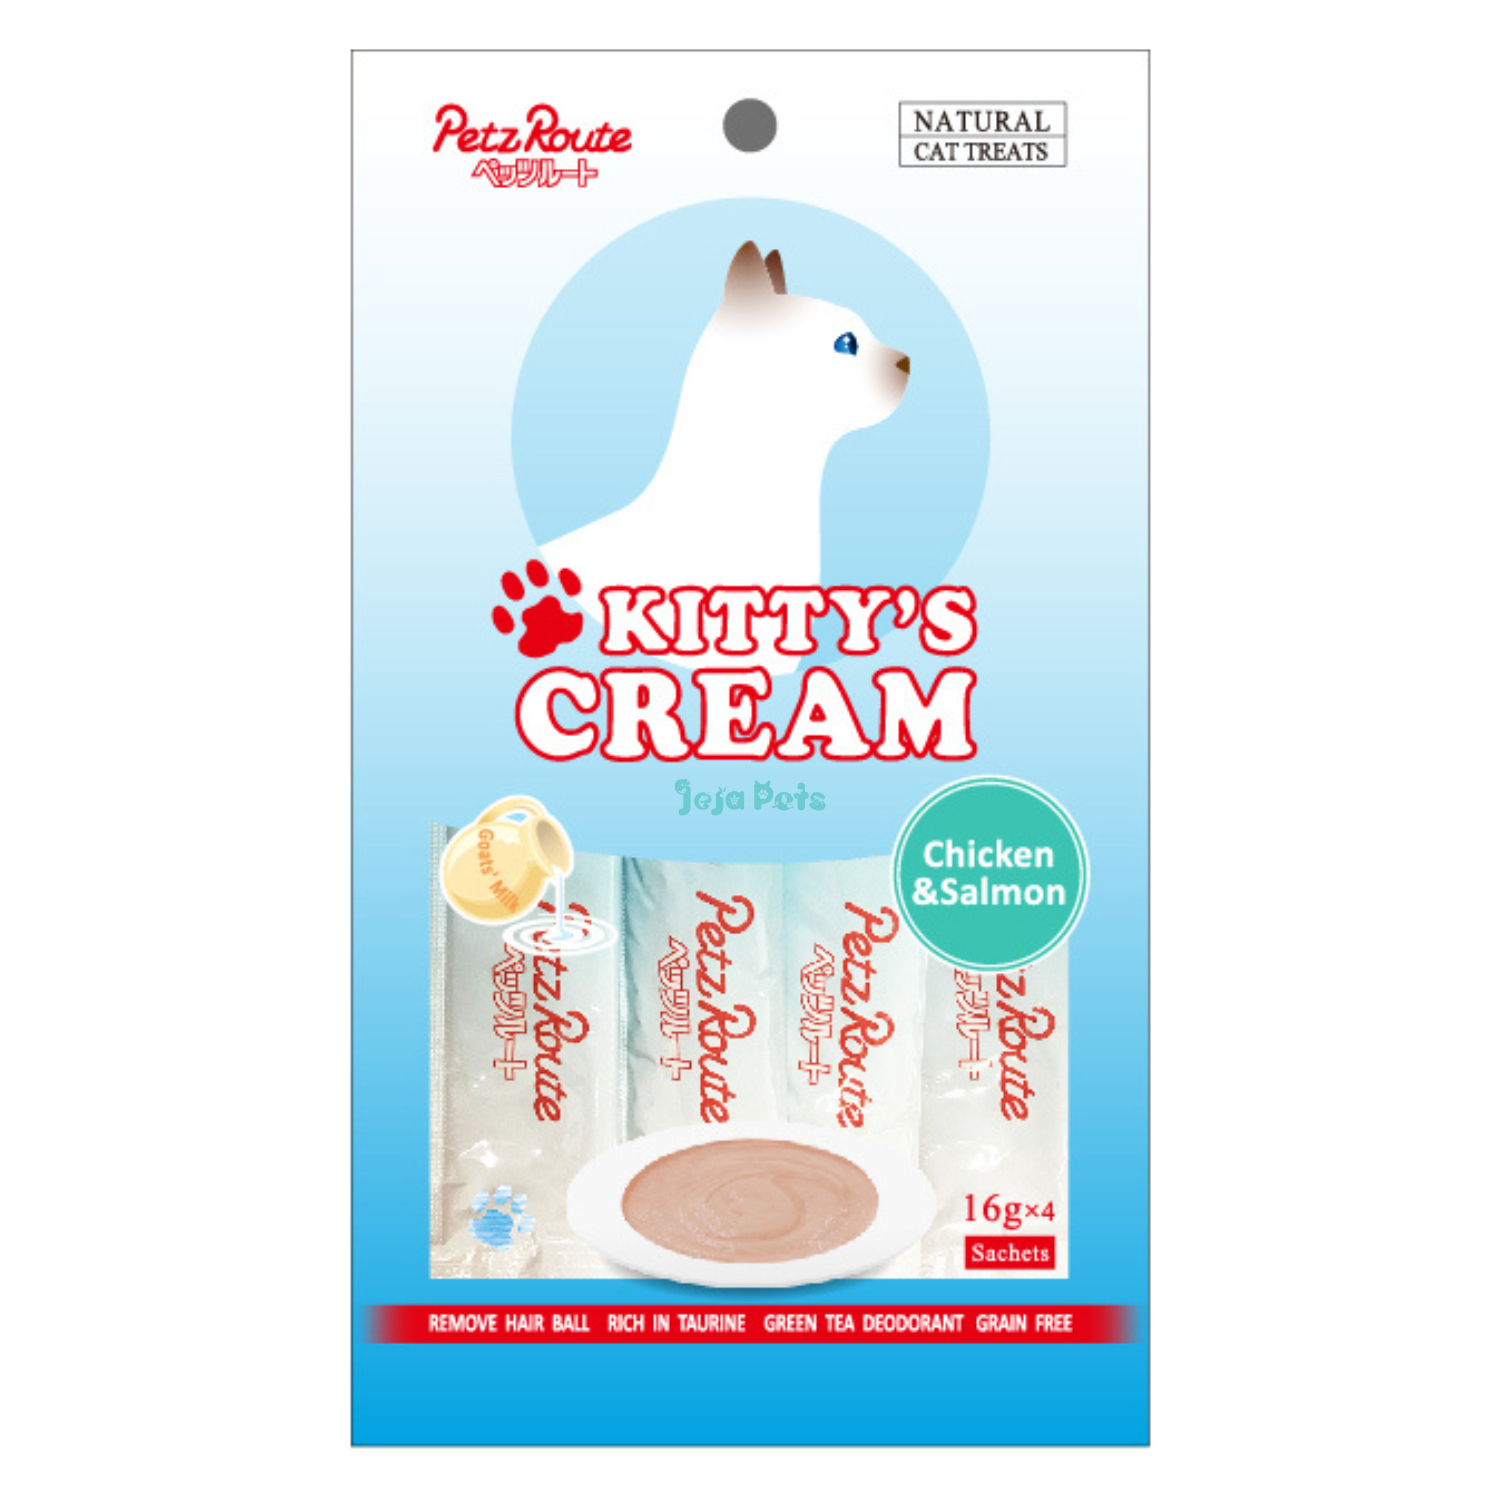 Petz Route Kitty's Cream (Chicken and Salmon) - 16g x 4